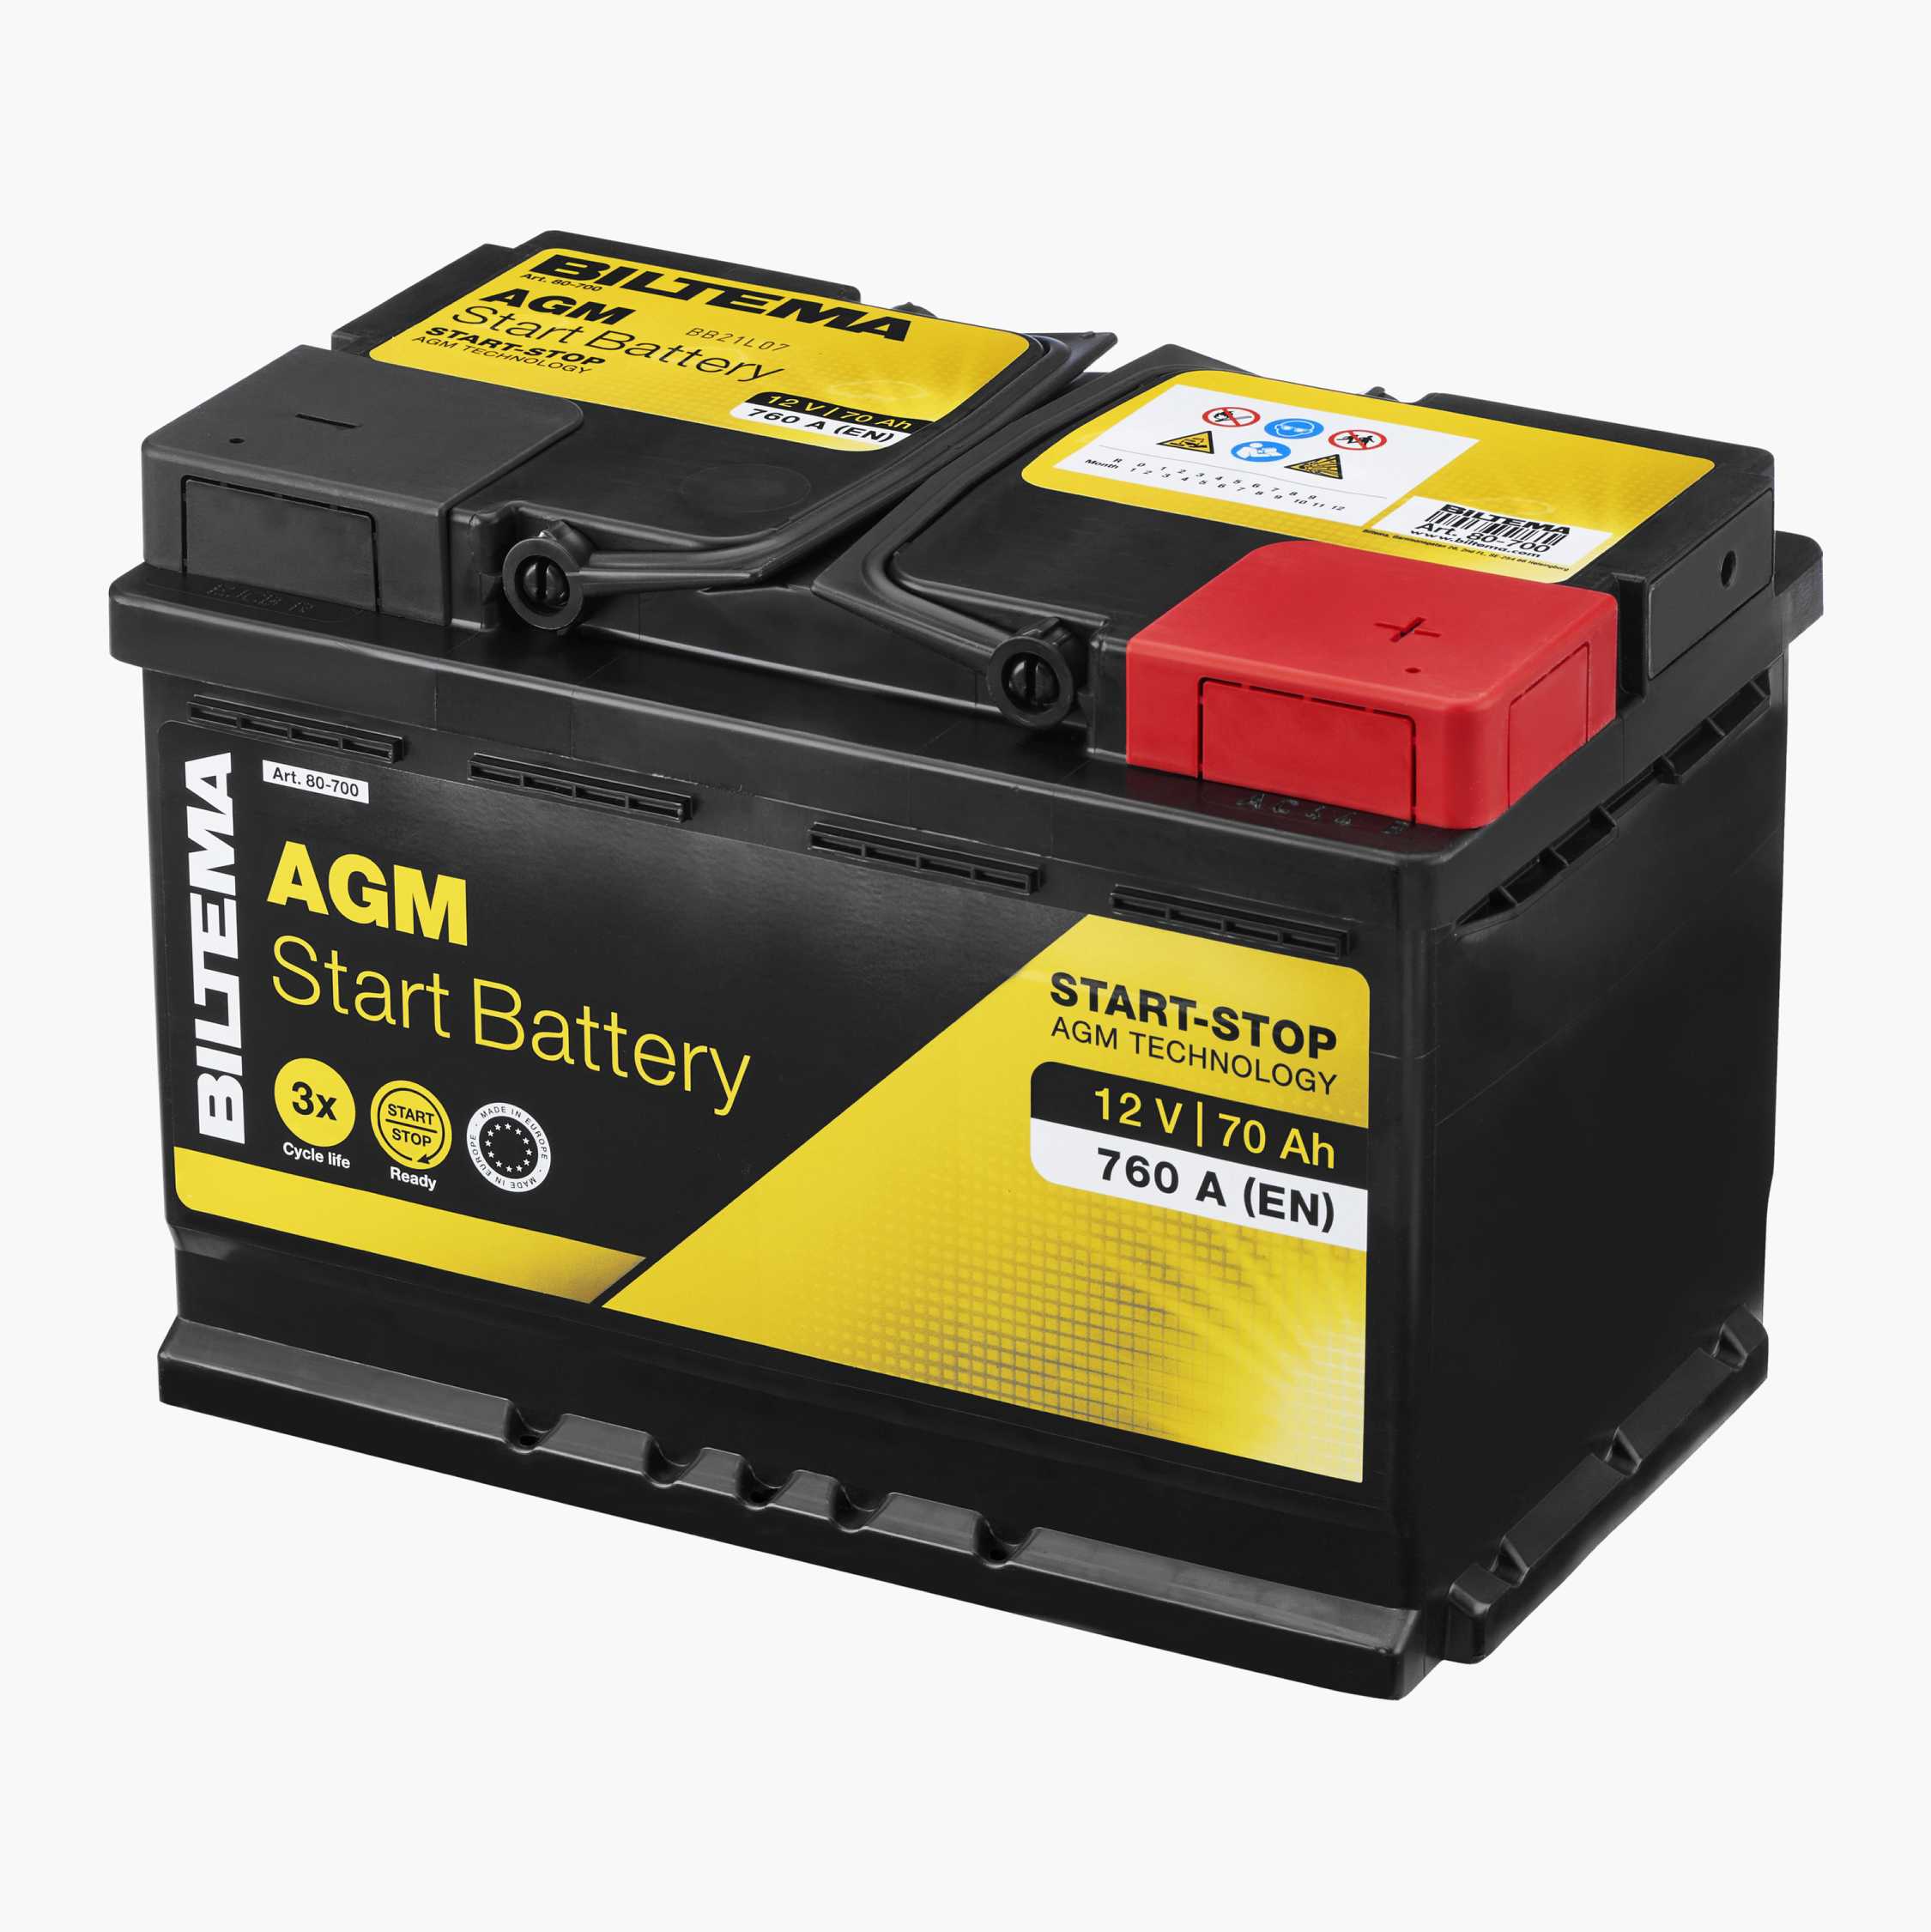 Electronicx AGM Car Battery Starter Battery Battery Start-Stop 95 AH 12V  850A